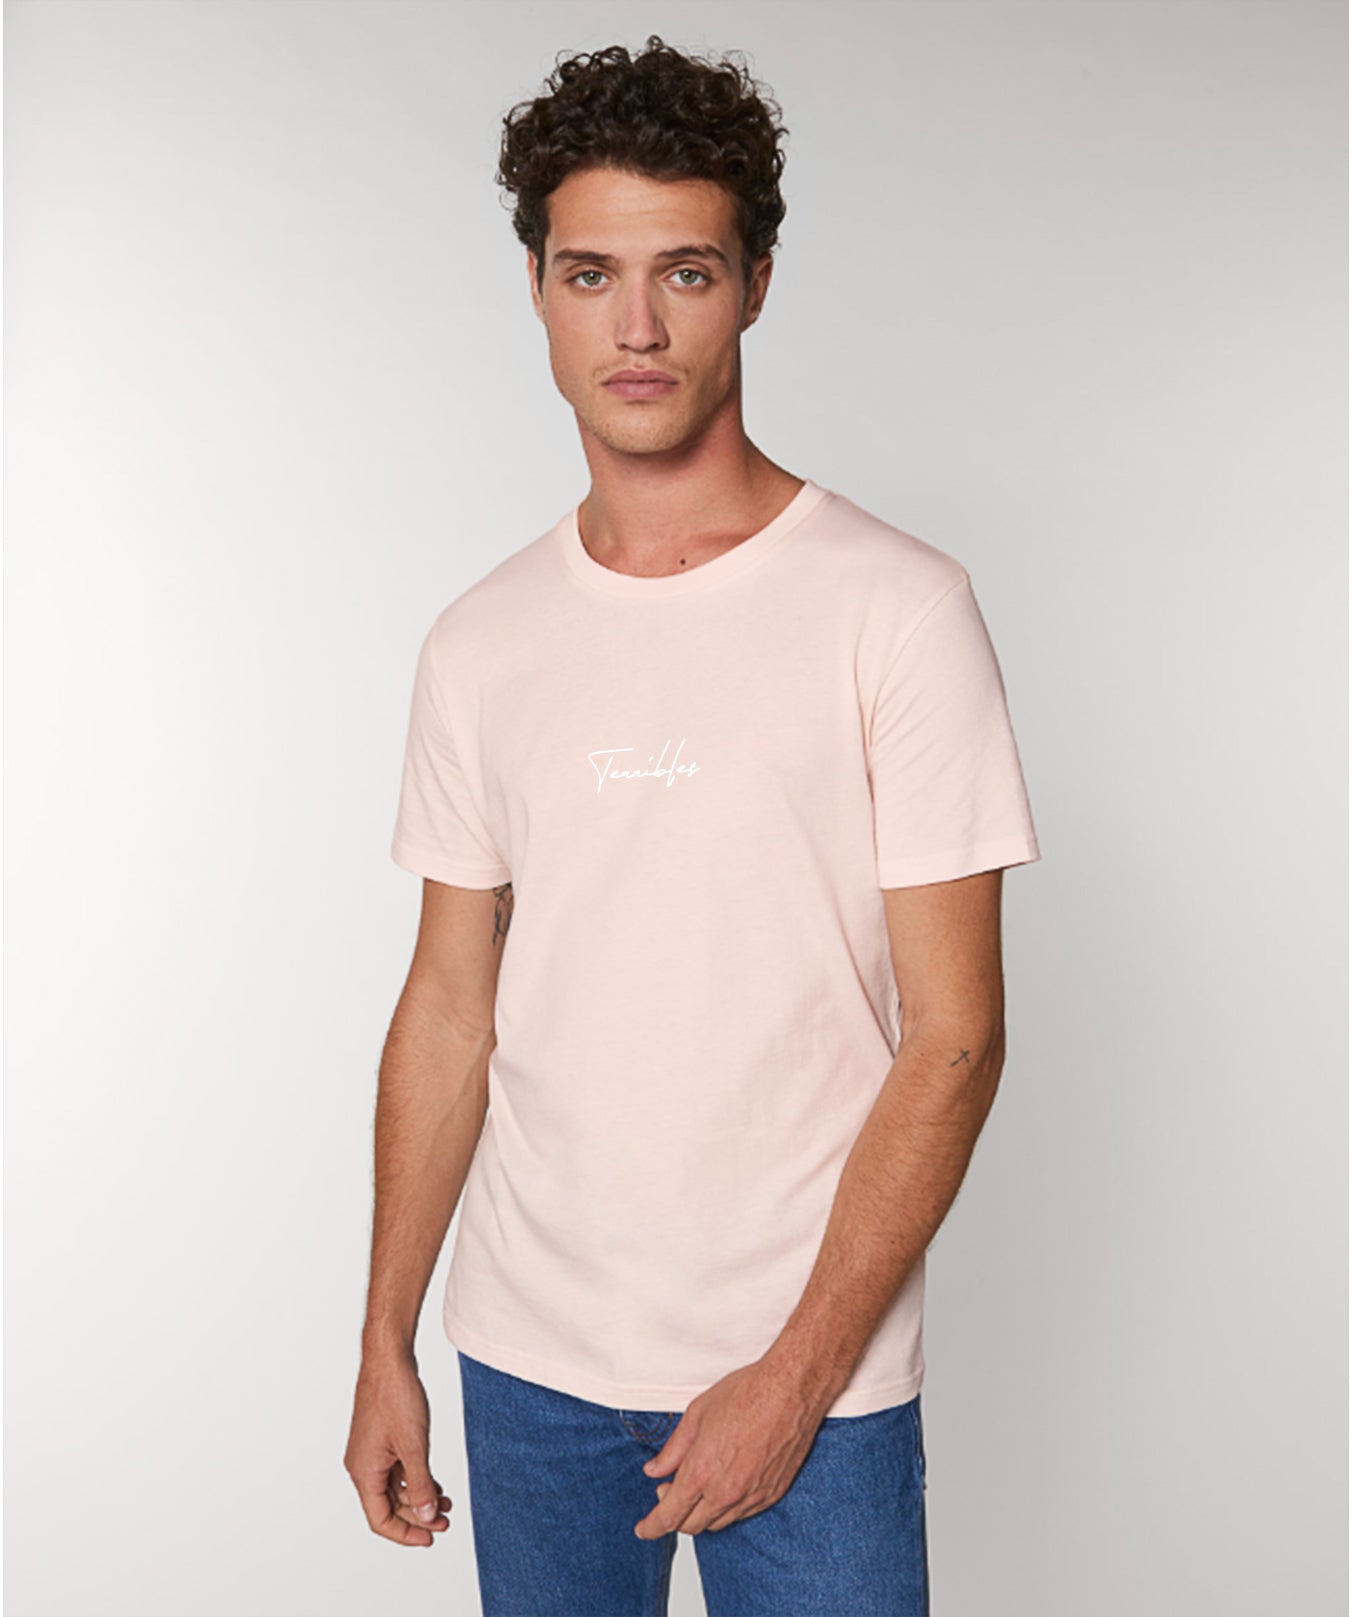 T-Shirt Unisexe Rose avec logo 'Terribles' Blanc - Terribles Nantais